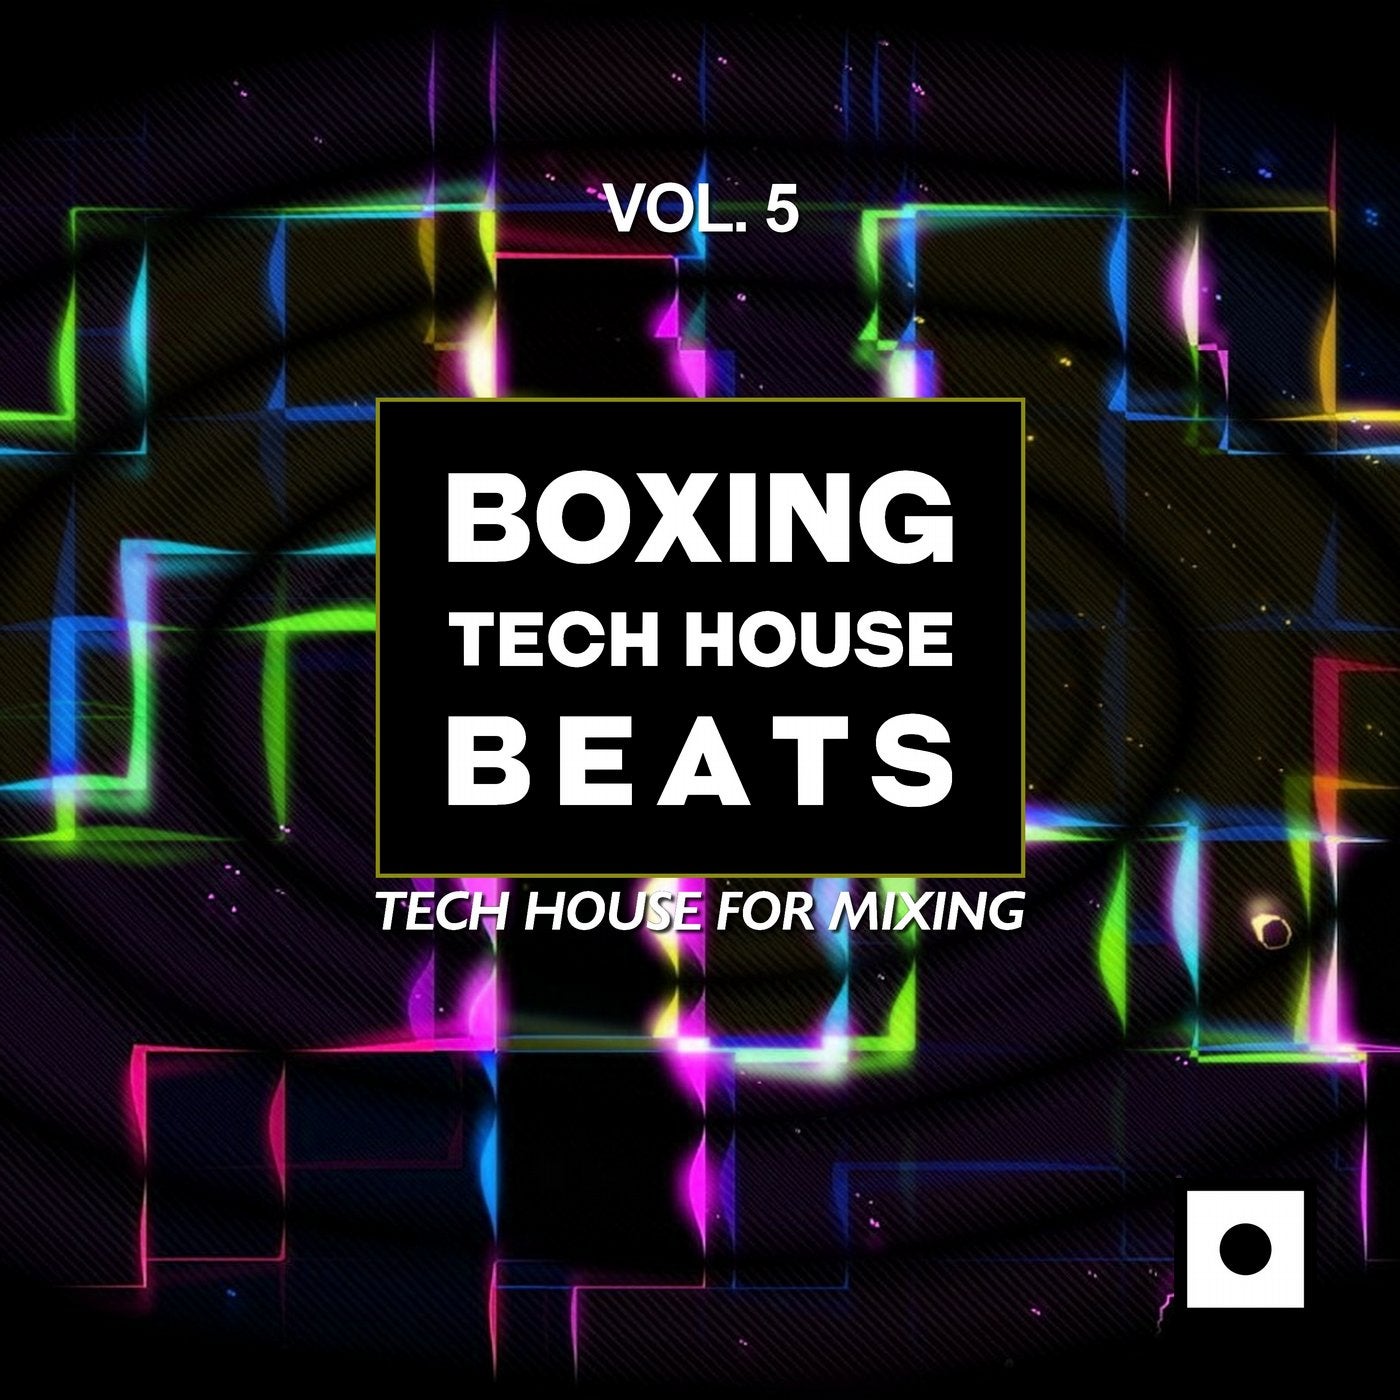 Boxing Tech House Beats, Vol. 5 (Tech House For Mixing)